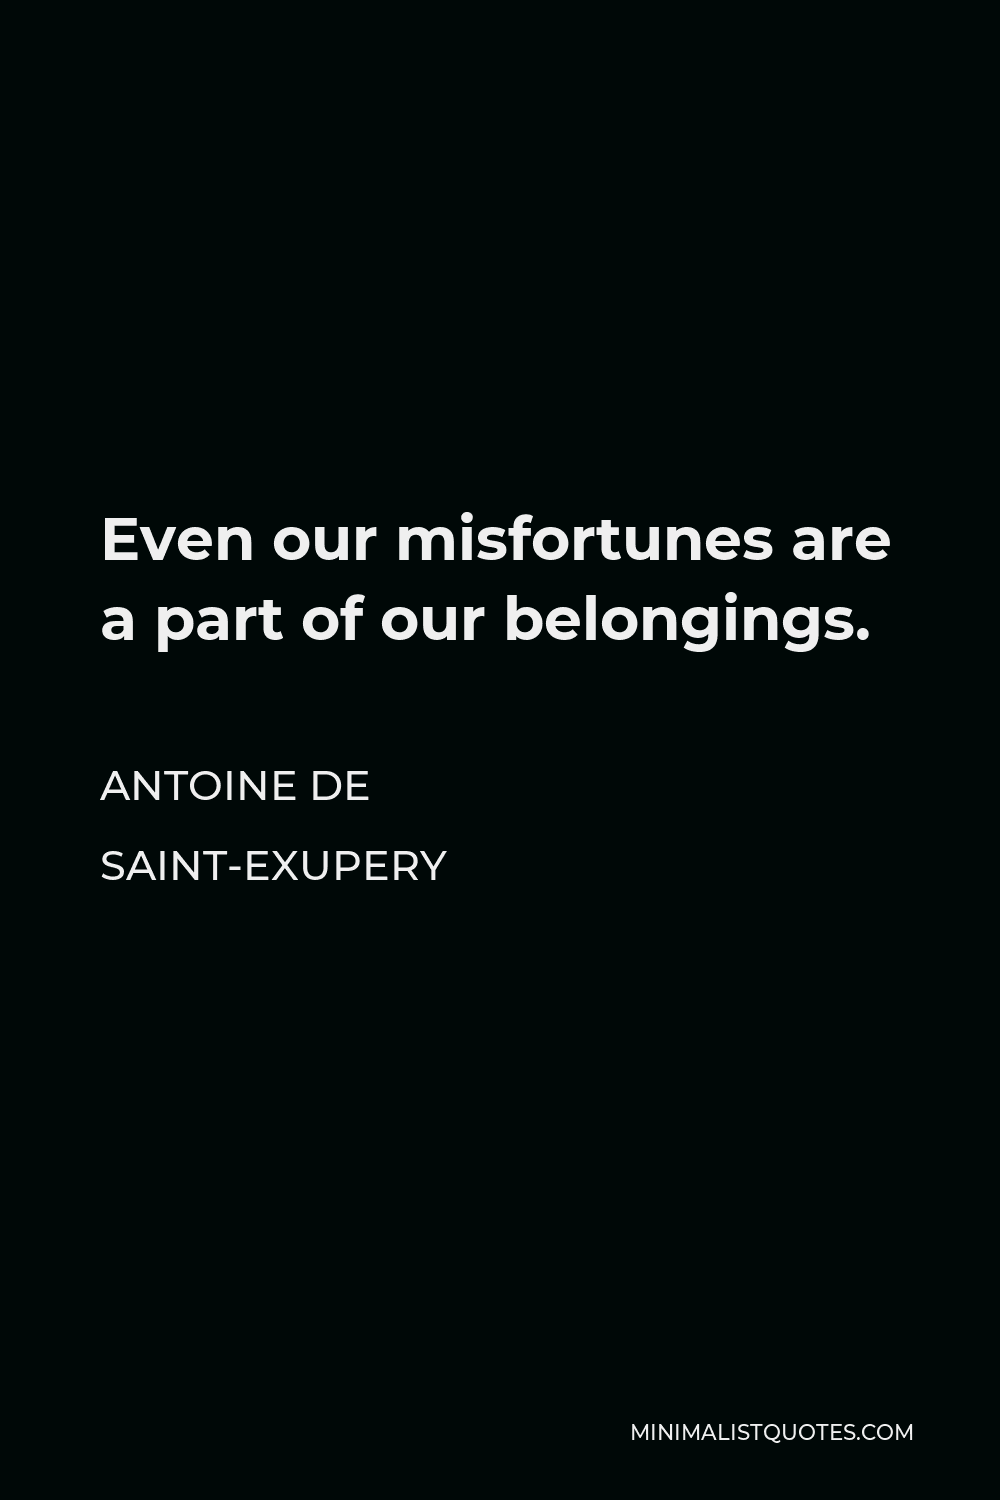 Antoine de Saint-Exupery Quote - Even our misfortunes are a part of our belongings.